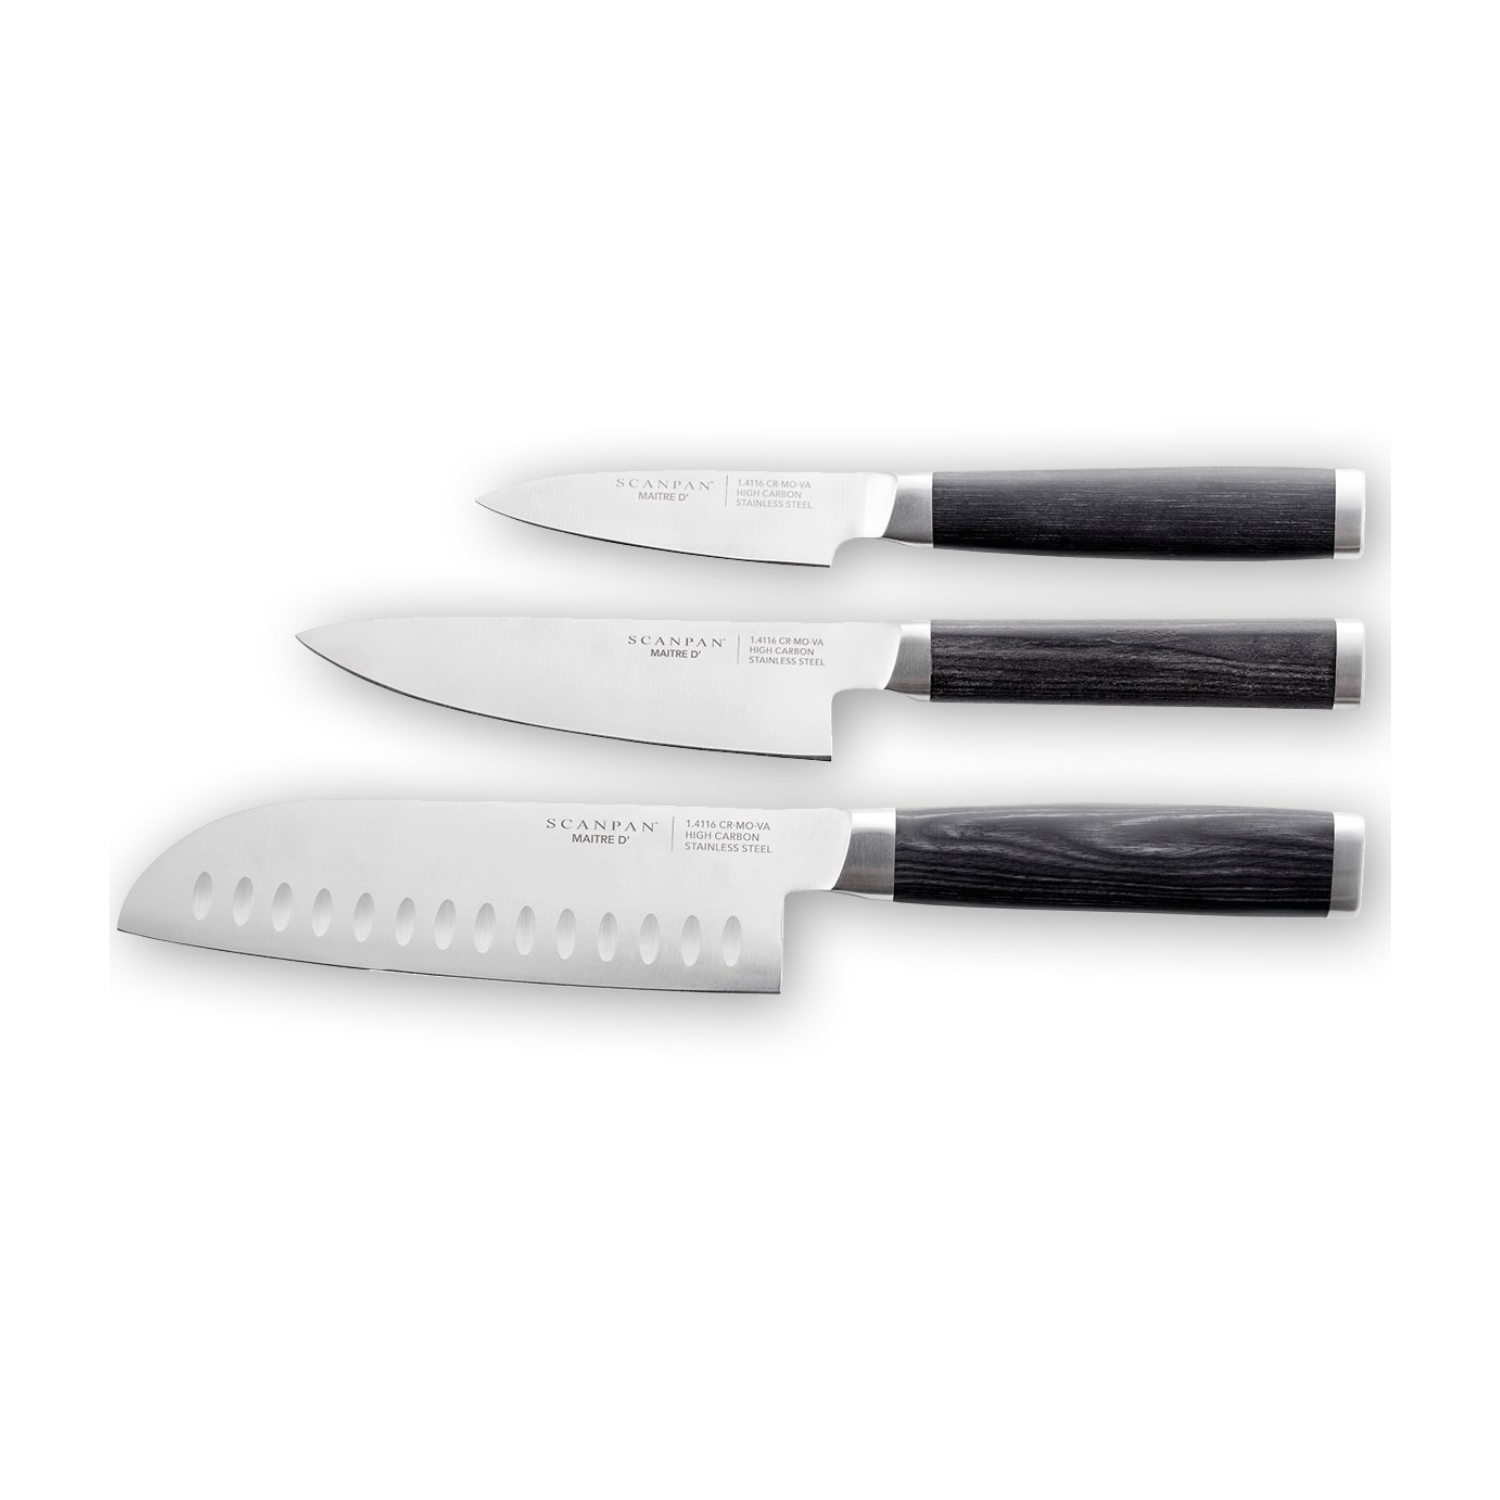 SCANPAN Maitre D' 3pc Asian Knife Set